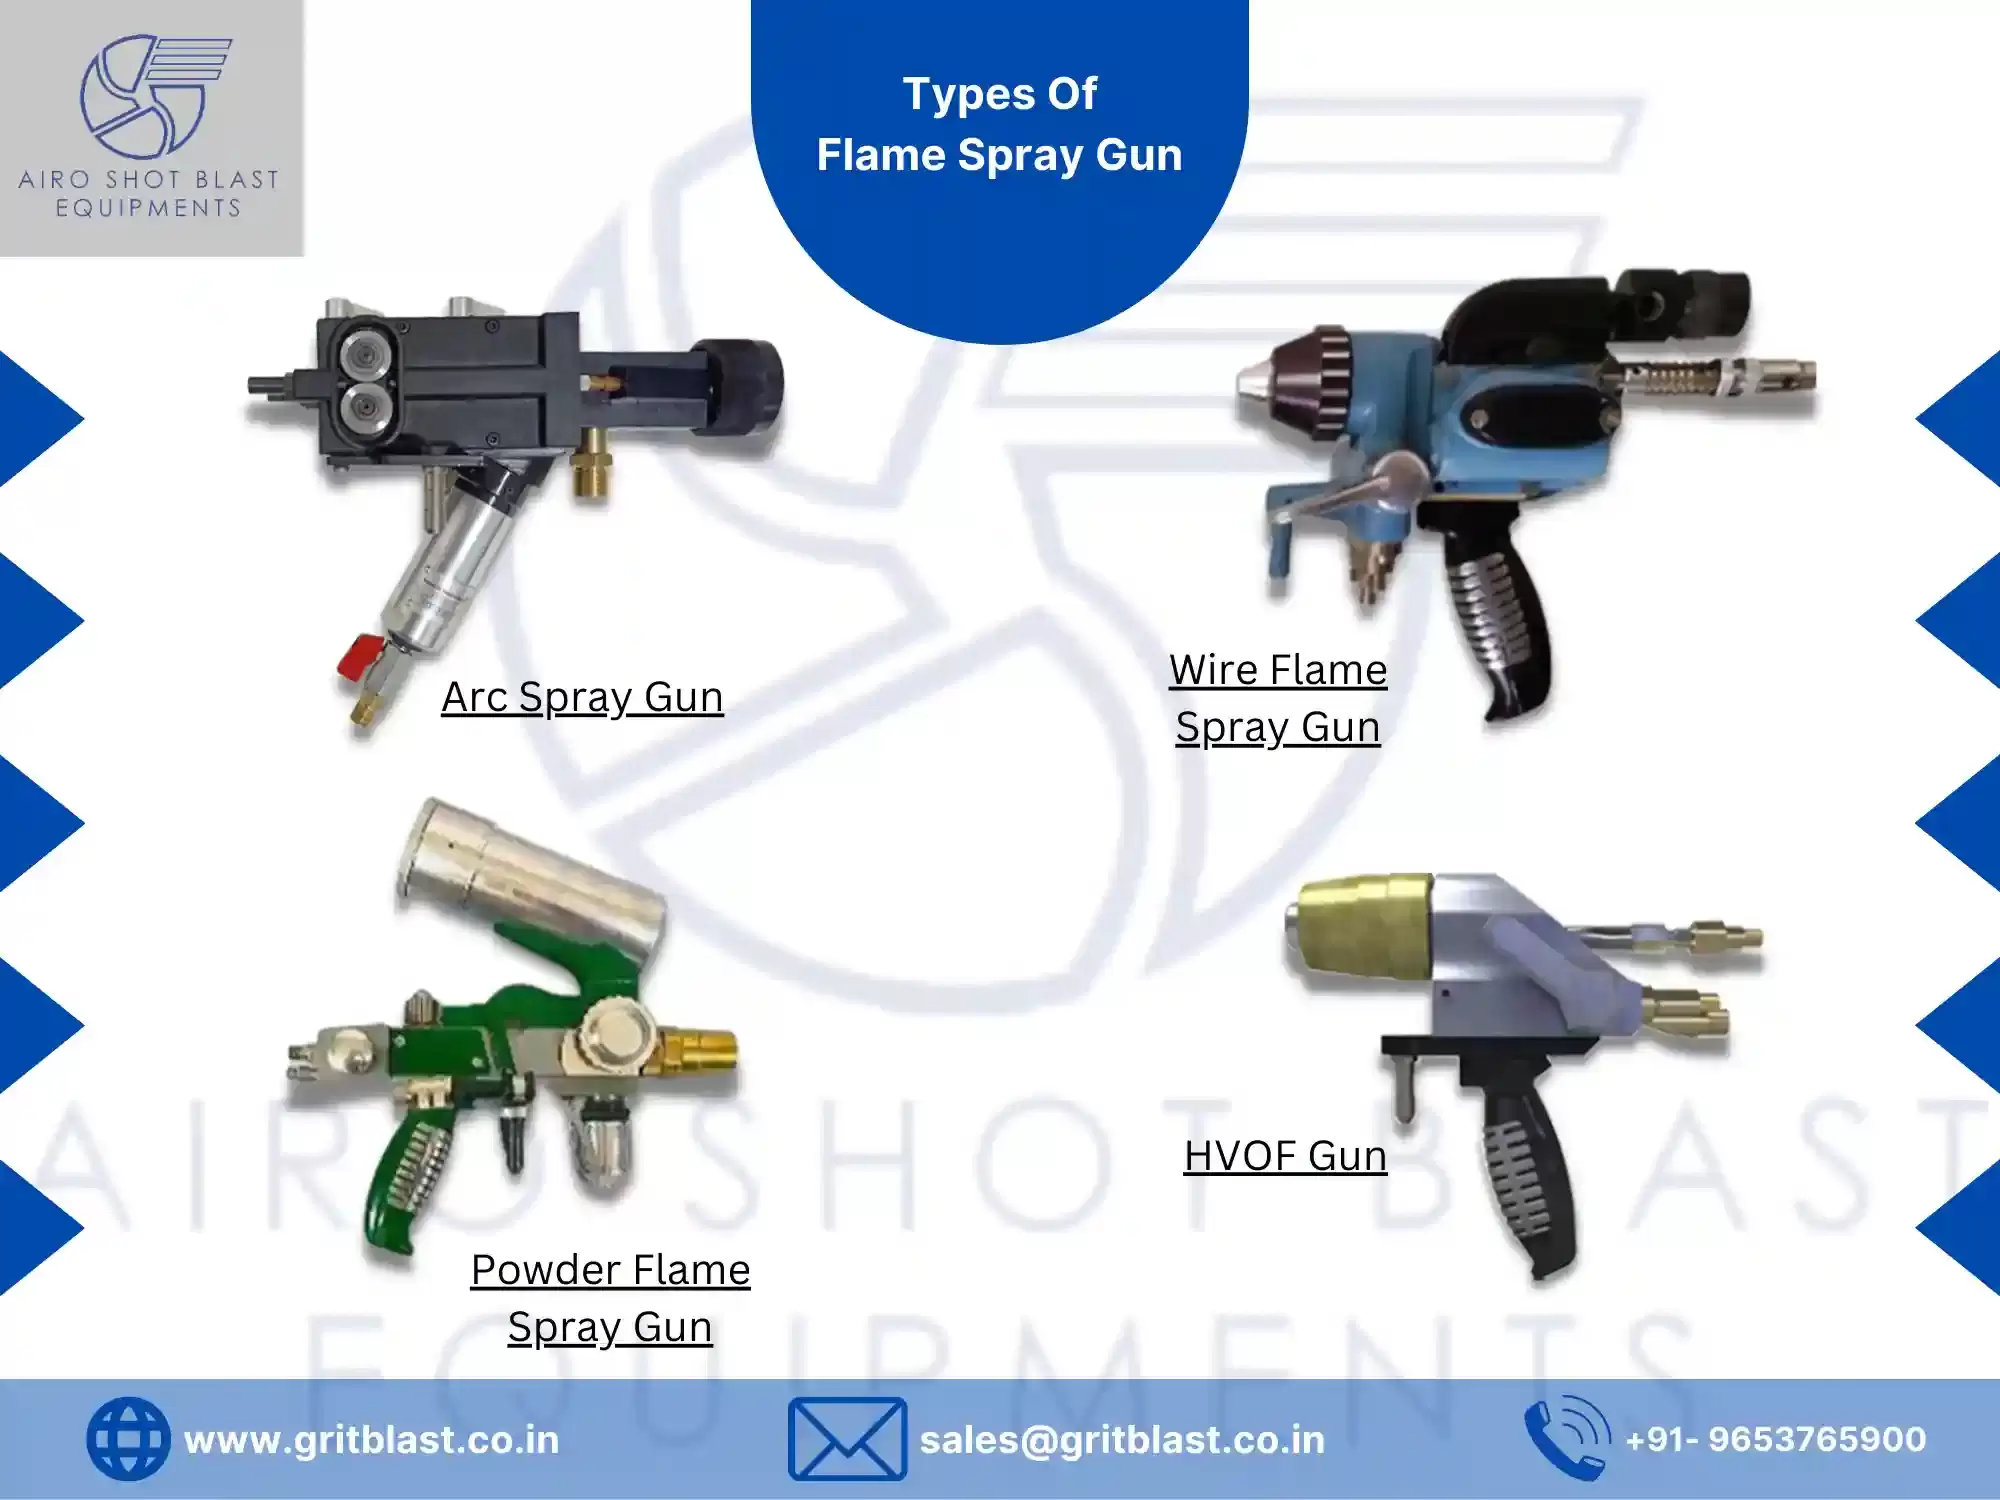 Types of Flame Spray Guns